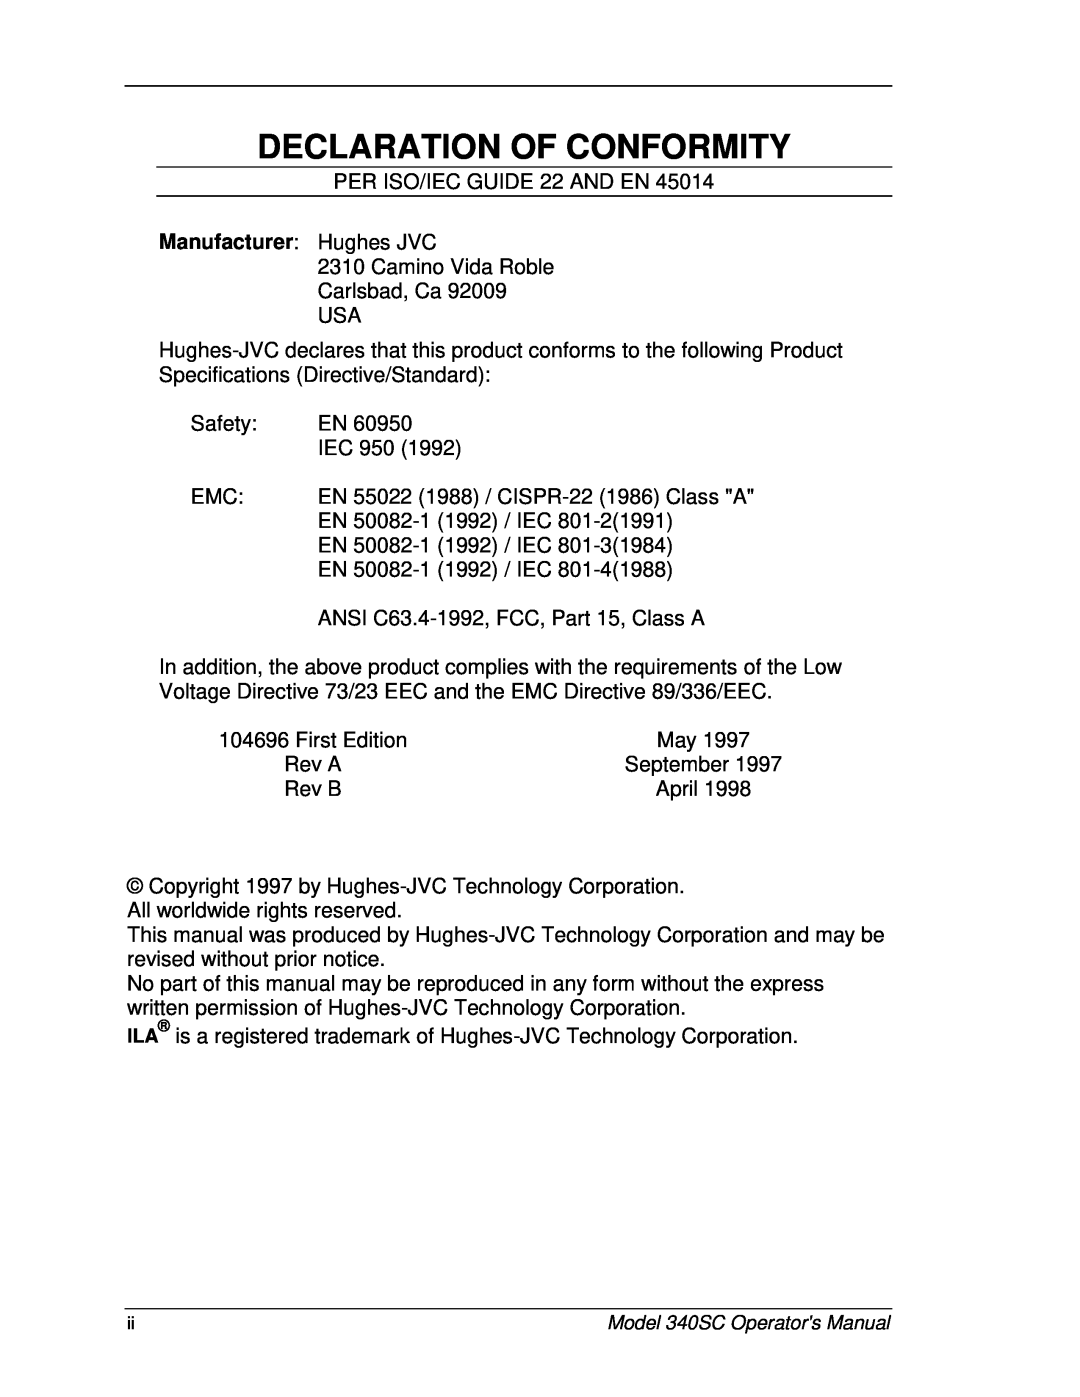 JVC 340SC manual Declaration Of Conformity, Manufacturer Hughes JVC 